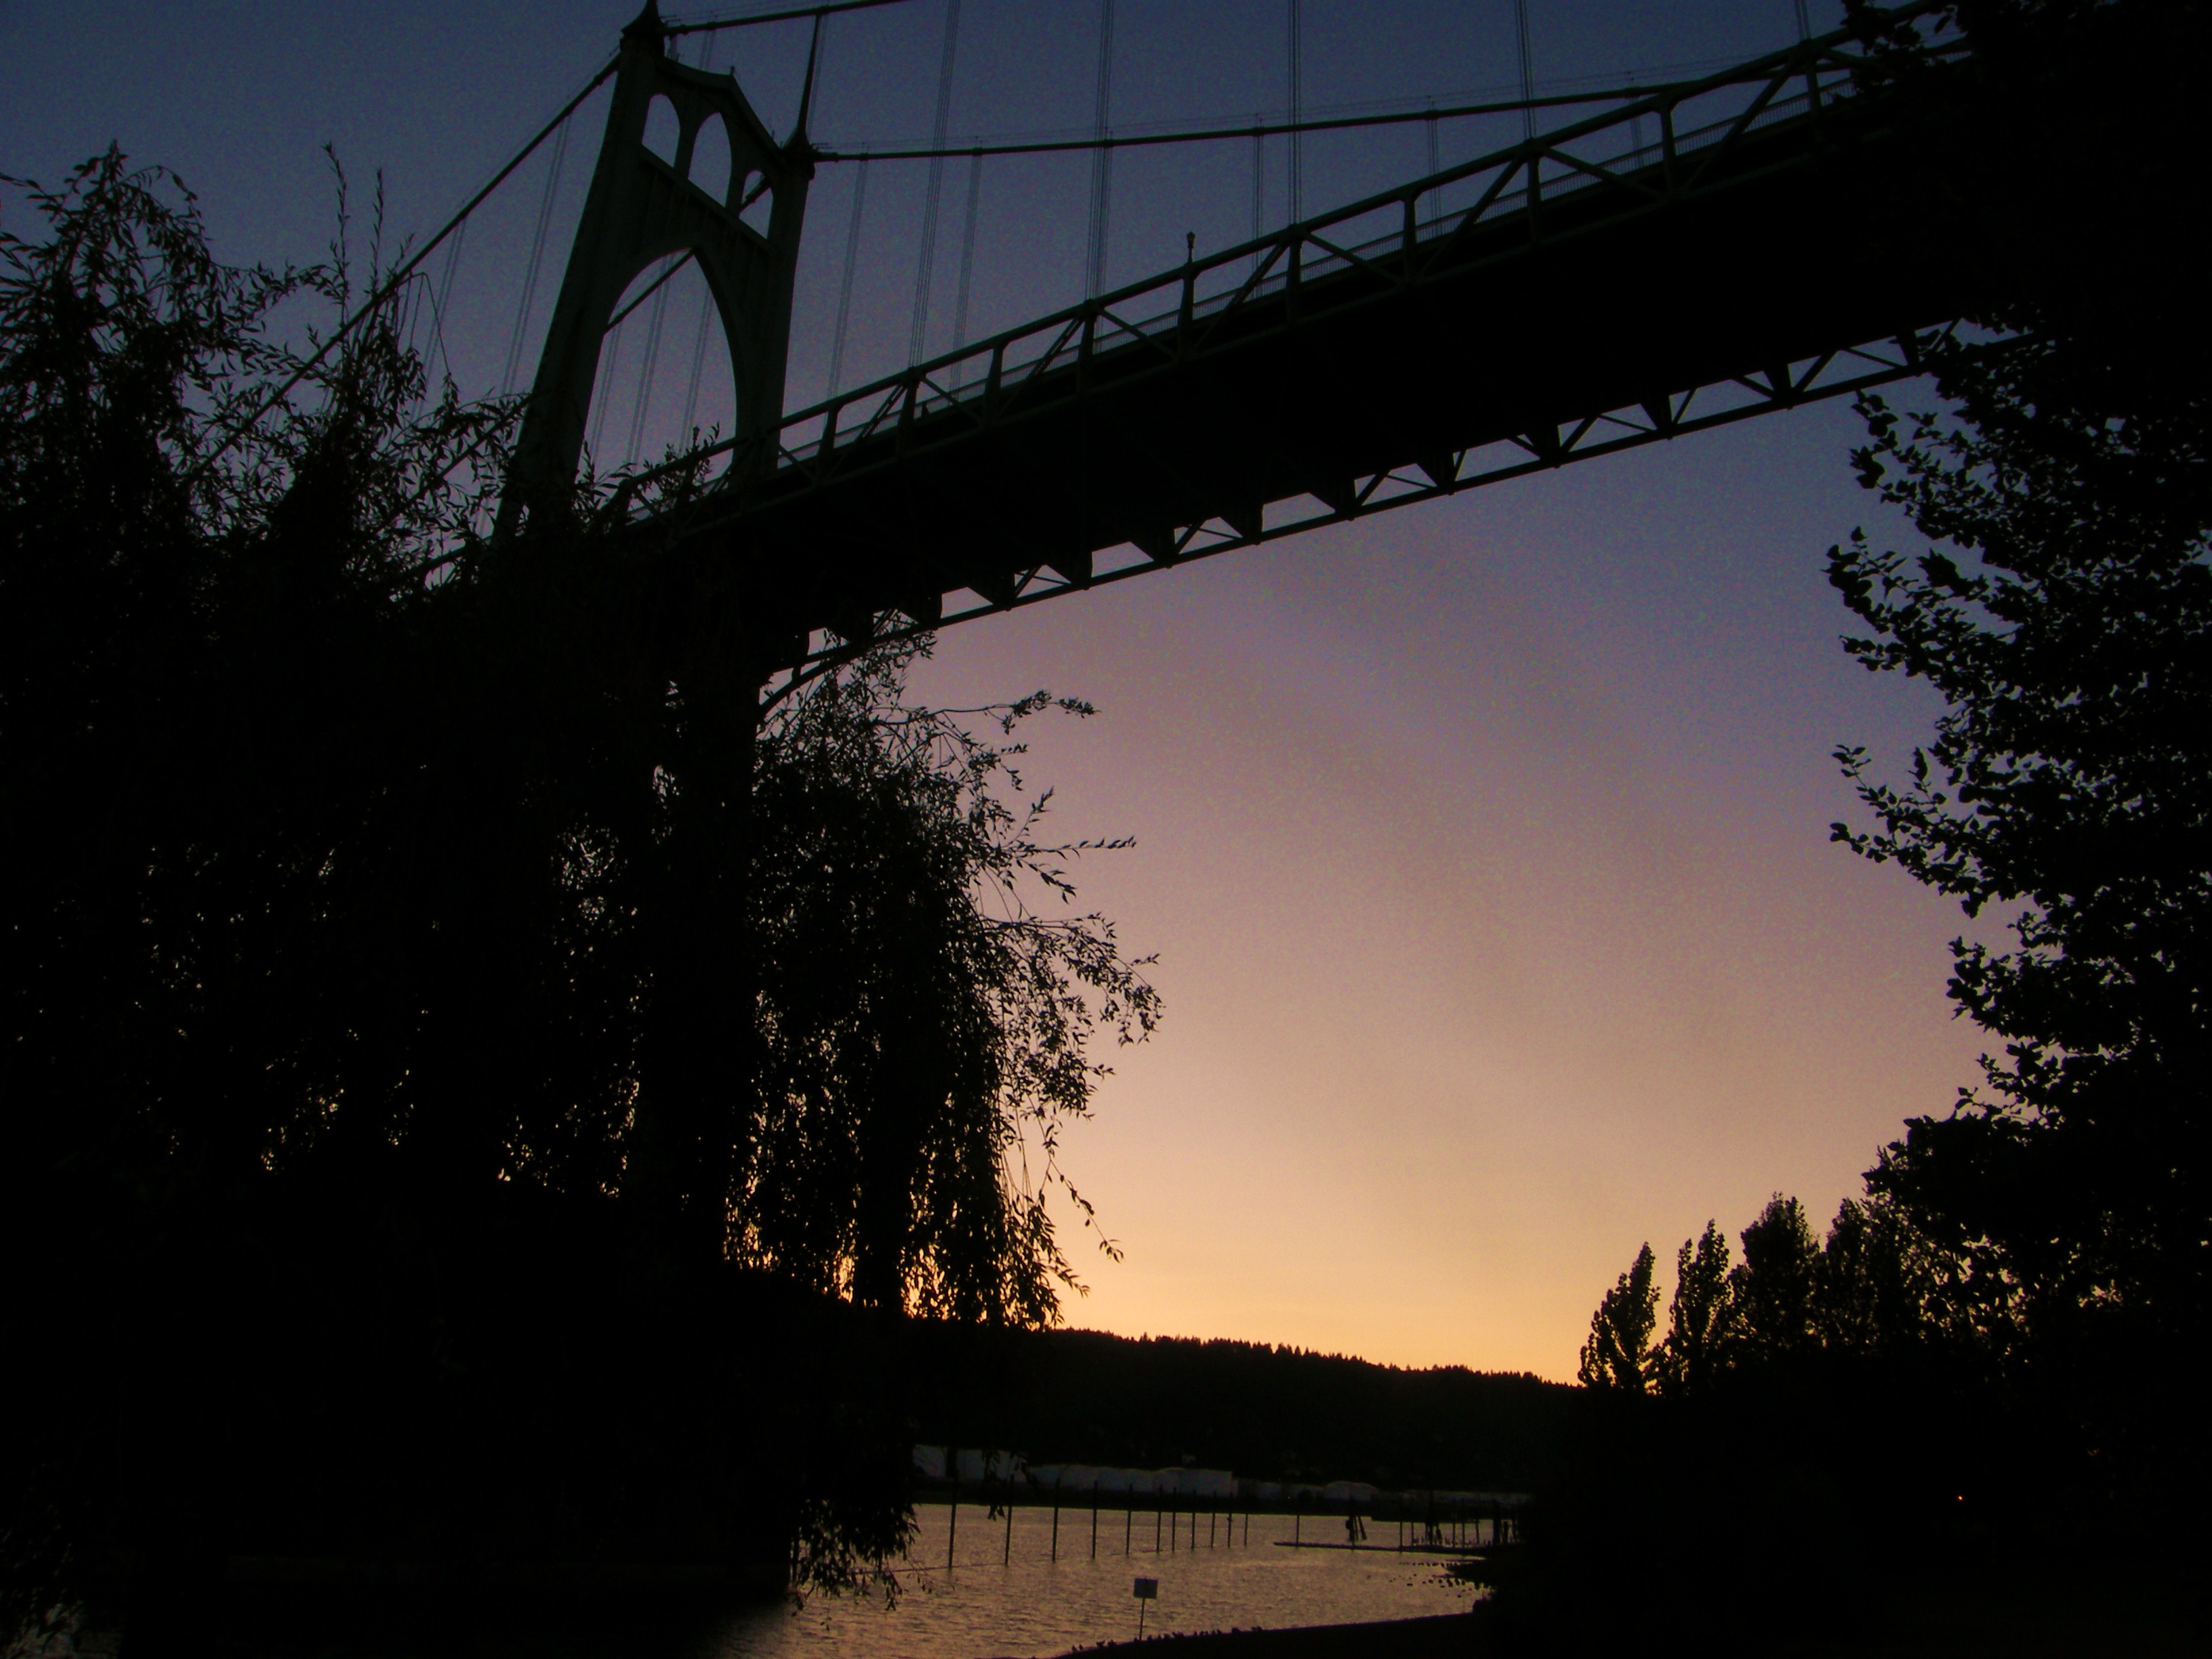 Sunset by the Bridge